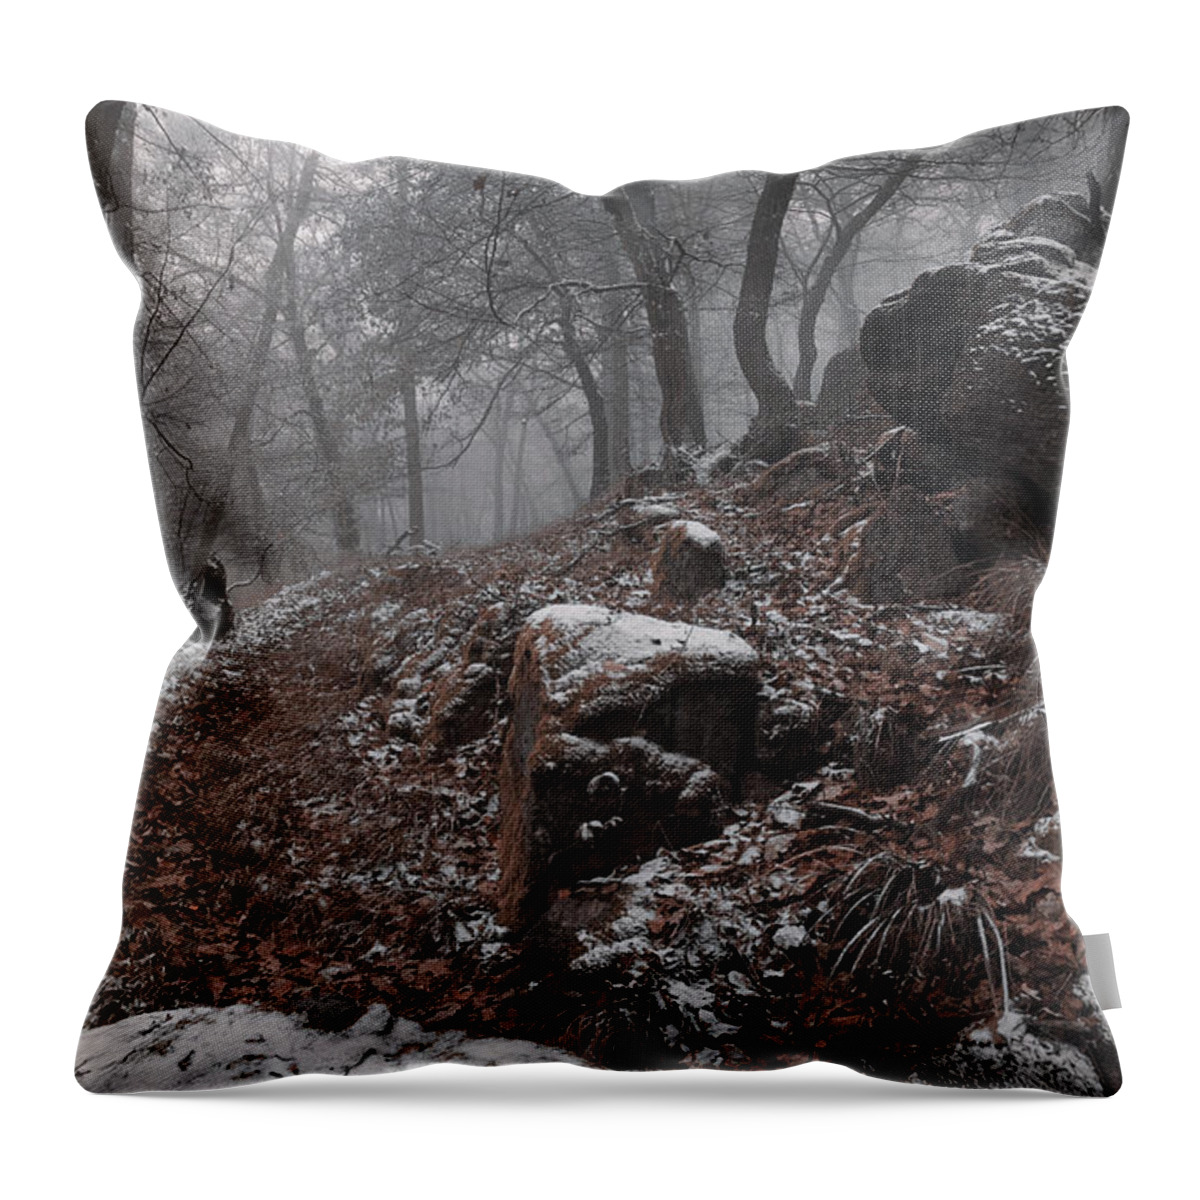 Jenny Rainbow Fine Art Photography Throw Pillow featuring the photograph Rocks and Trees by Jenny Rainbow